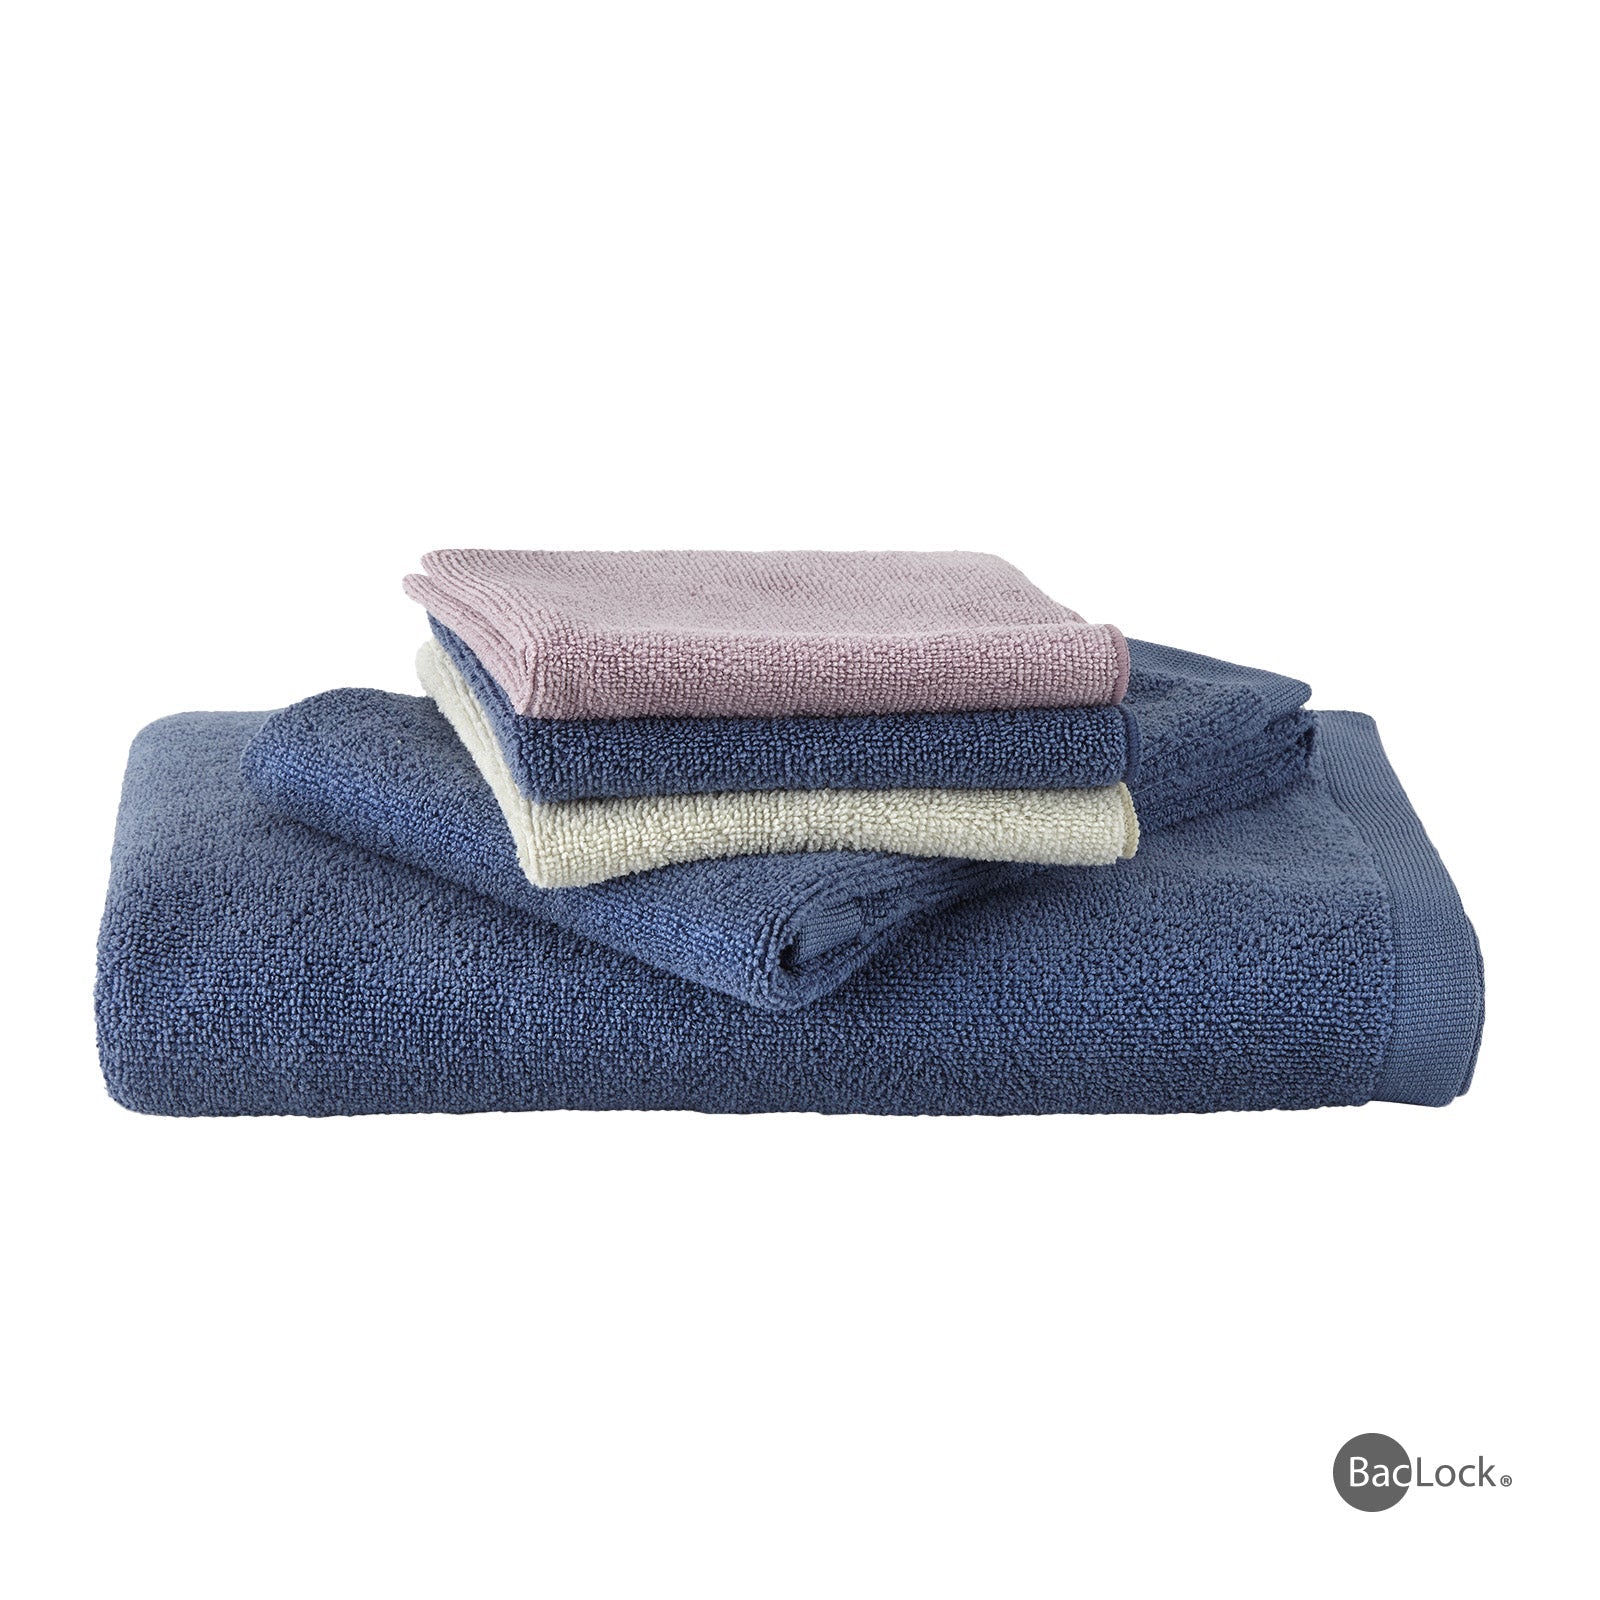 FREDRIKSJÖN bath towel, dark blue, 70x140 cm (28x55